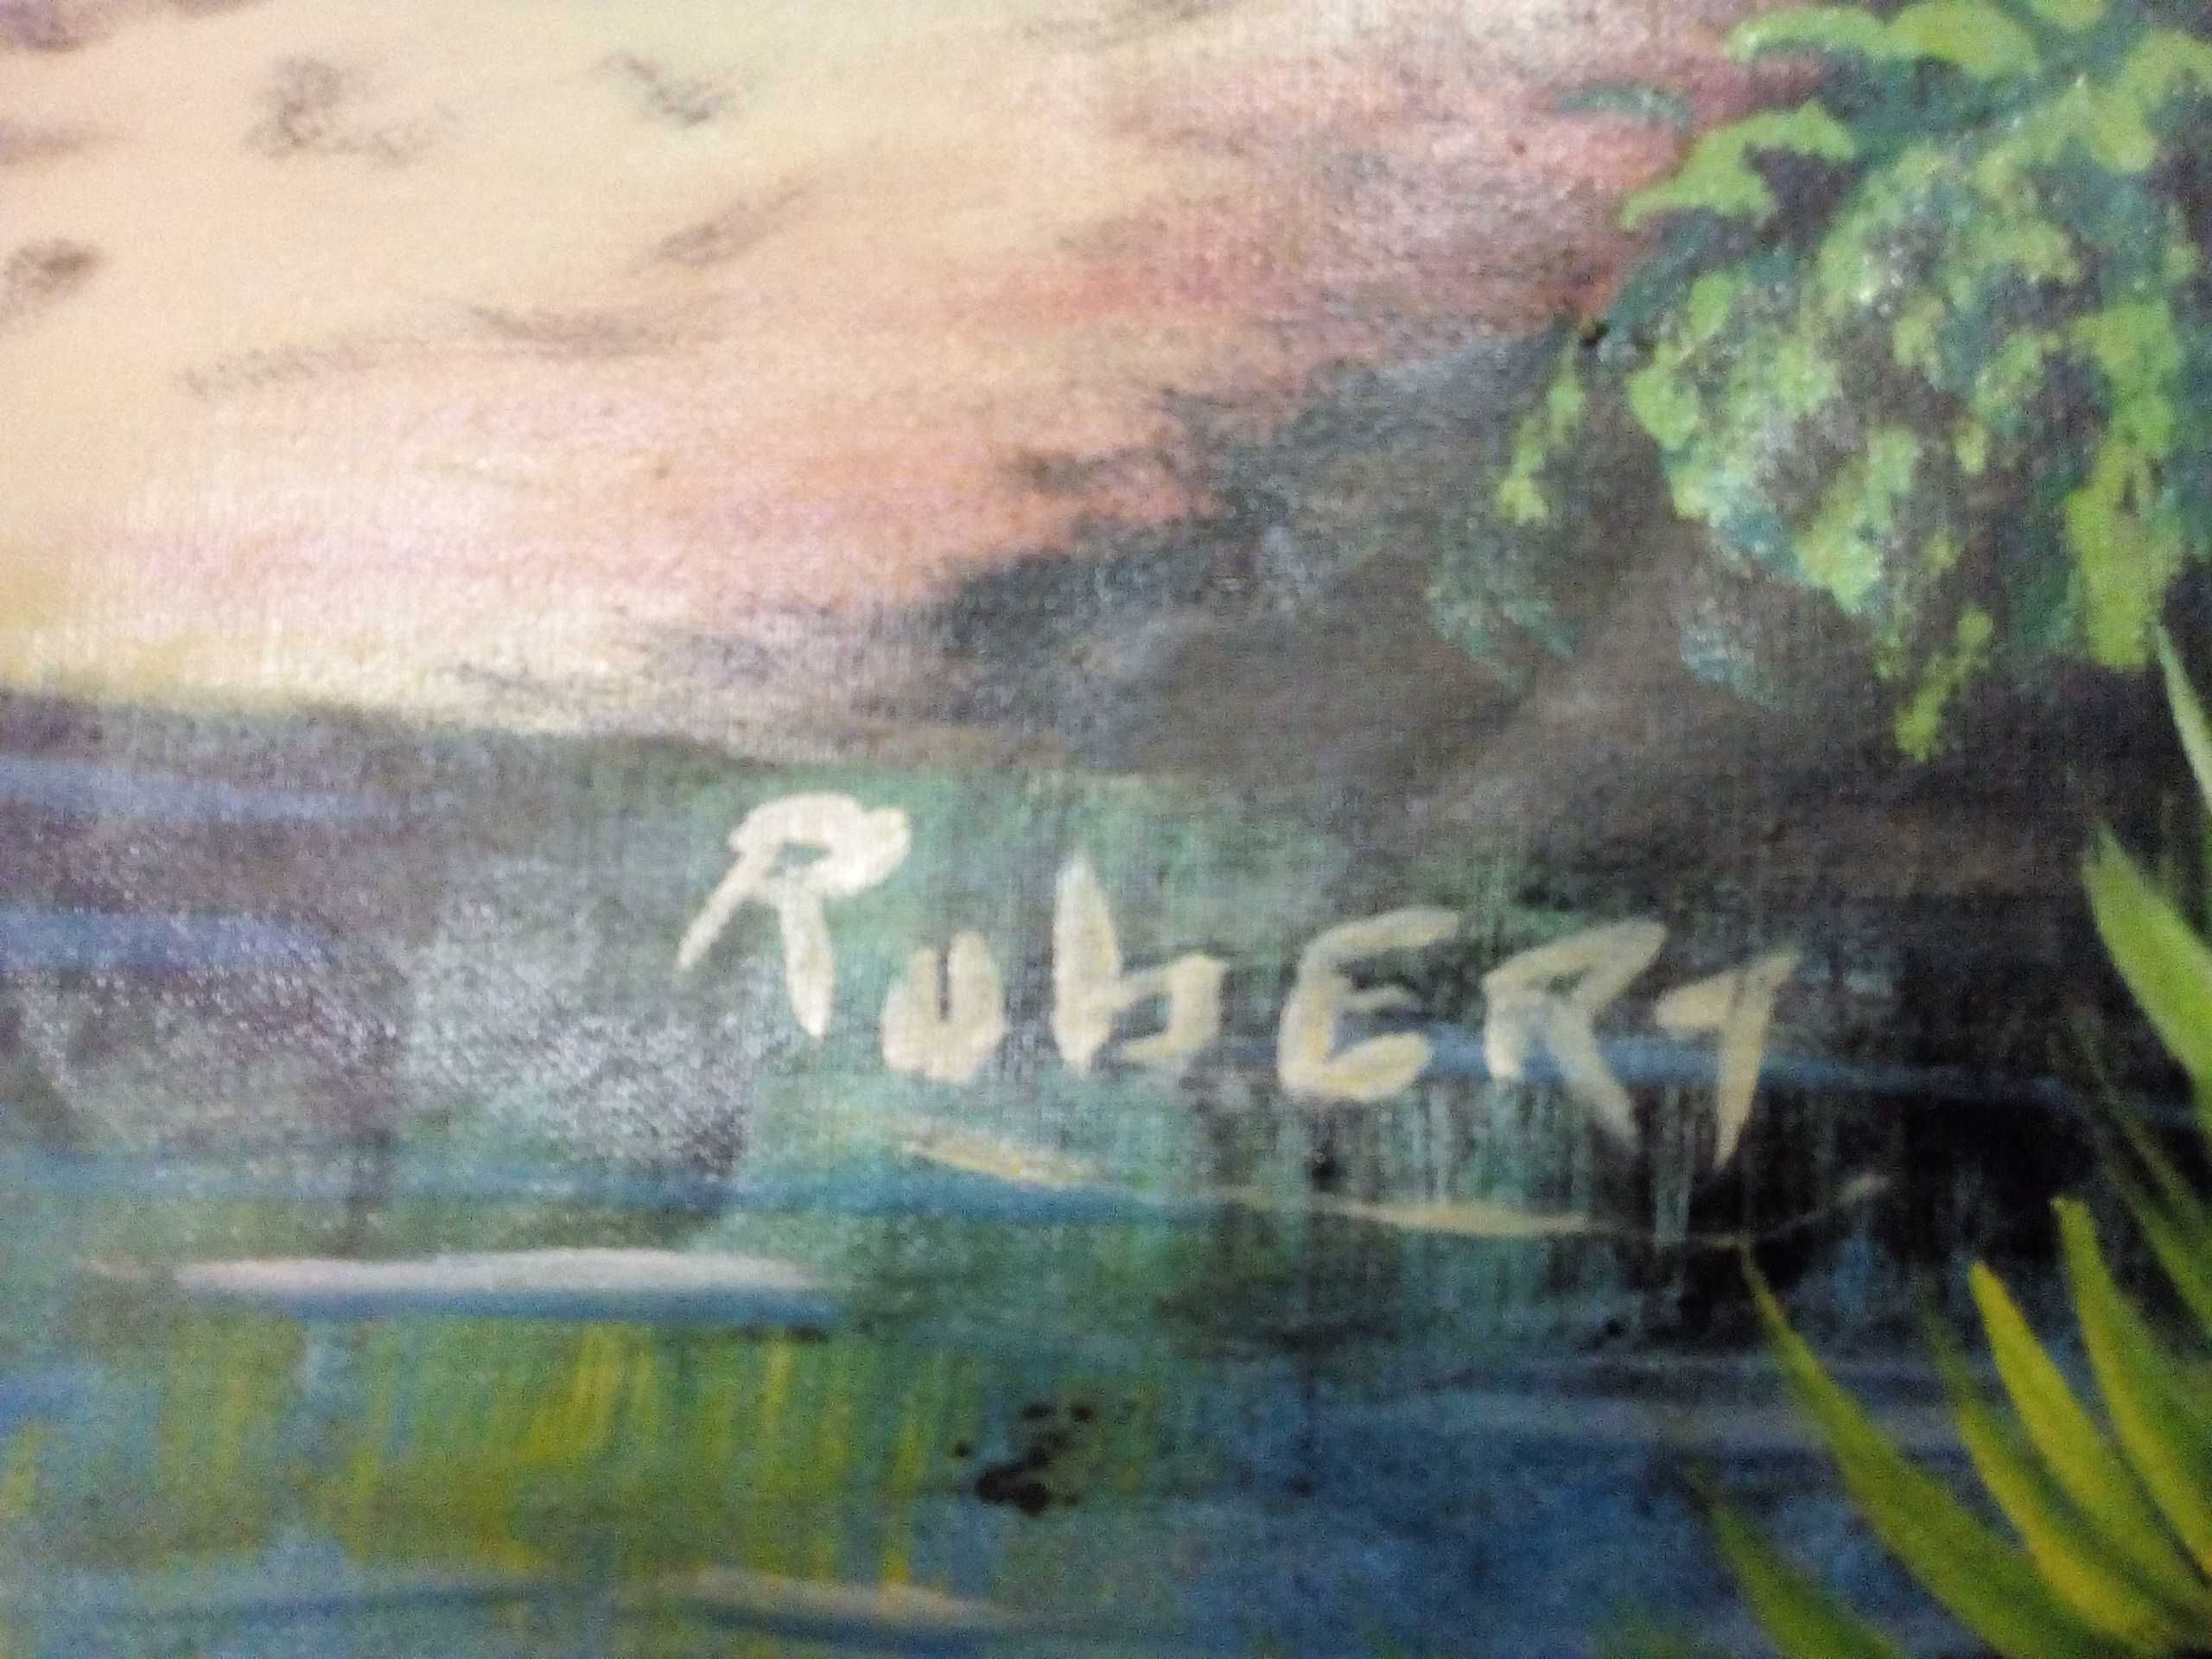 RUBERT / Africa - tablou/pictura in ulei,unicat facut de mana/handmade